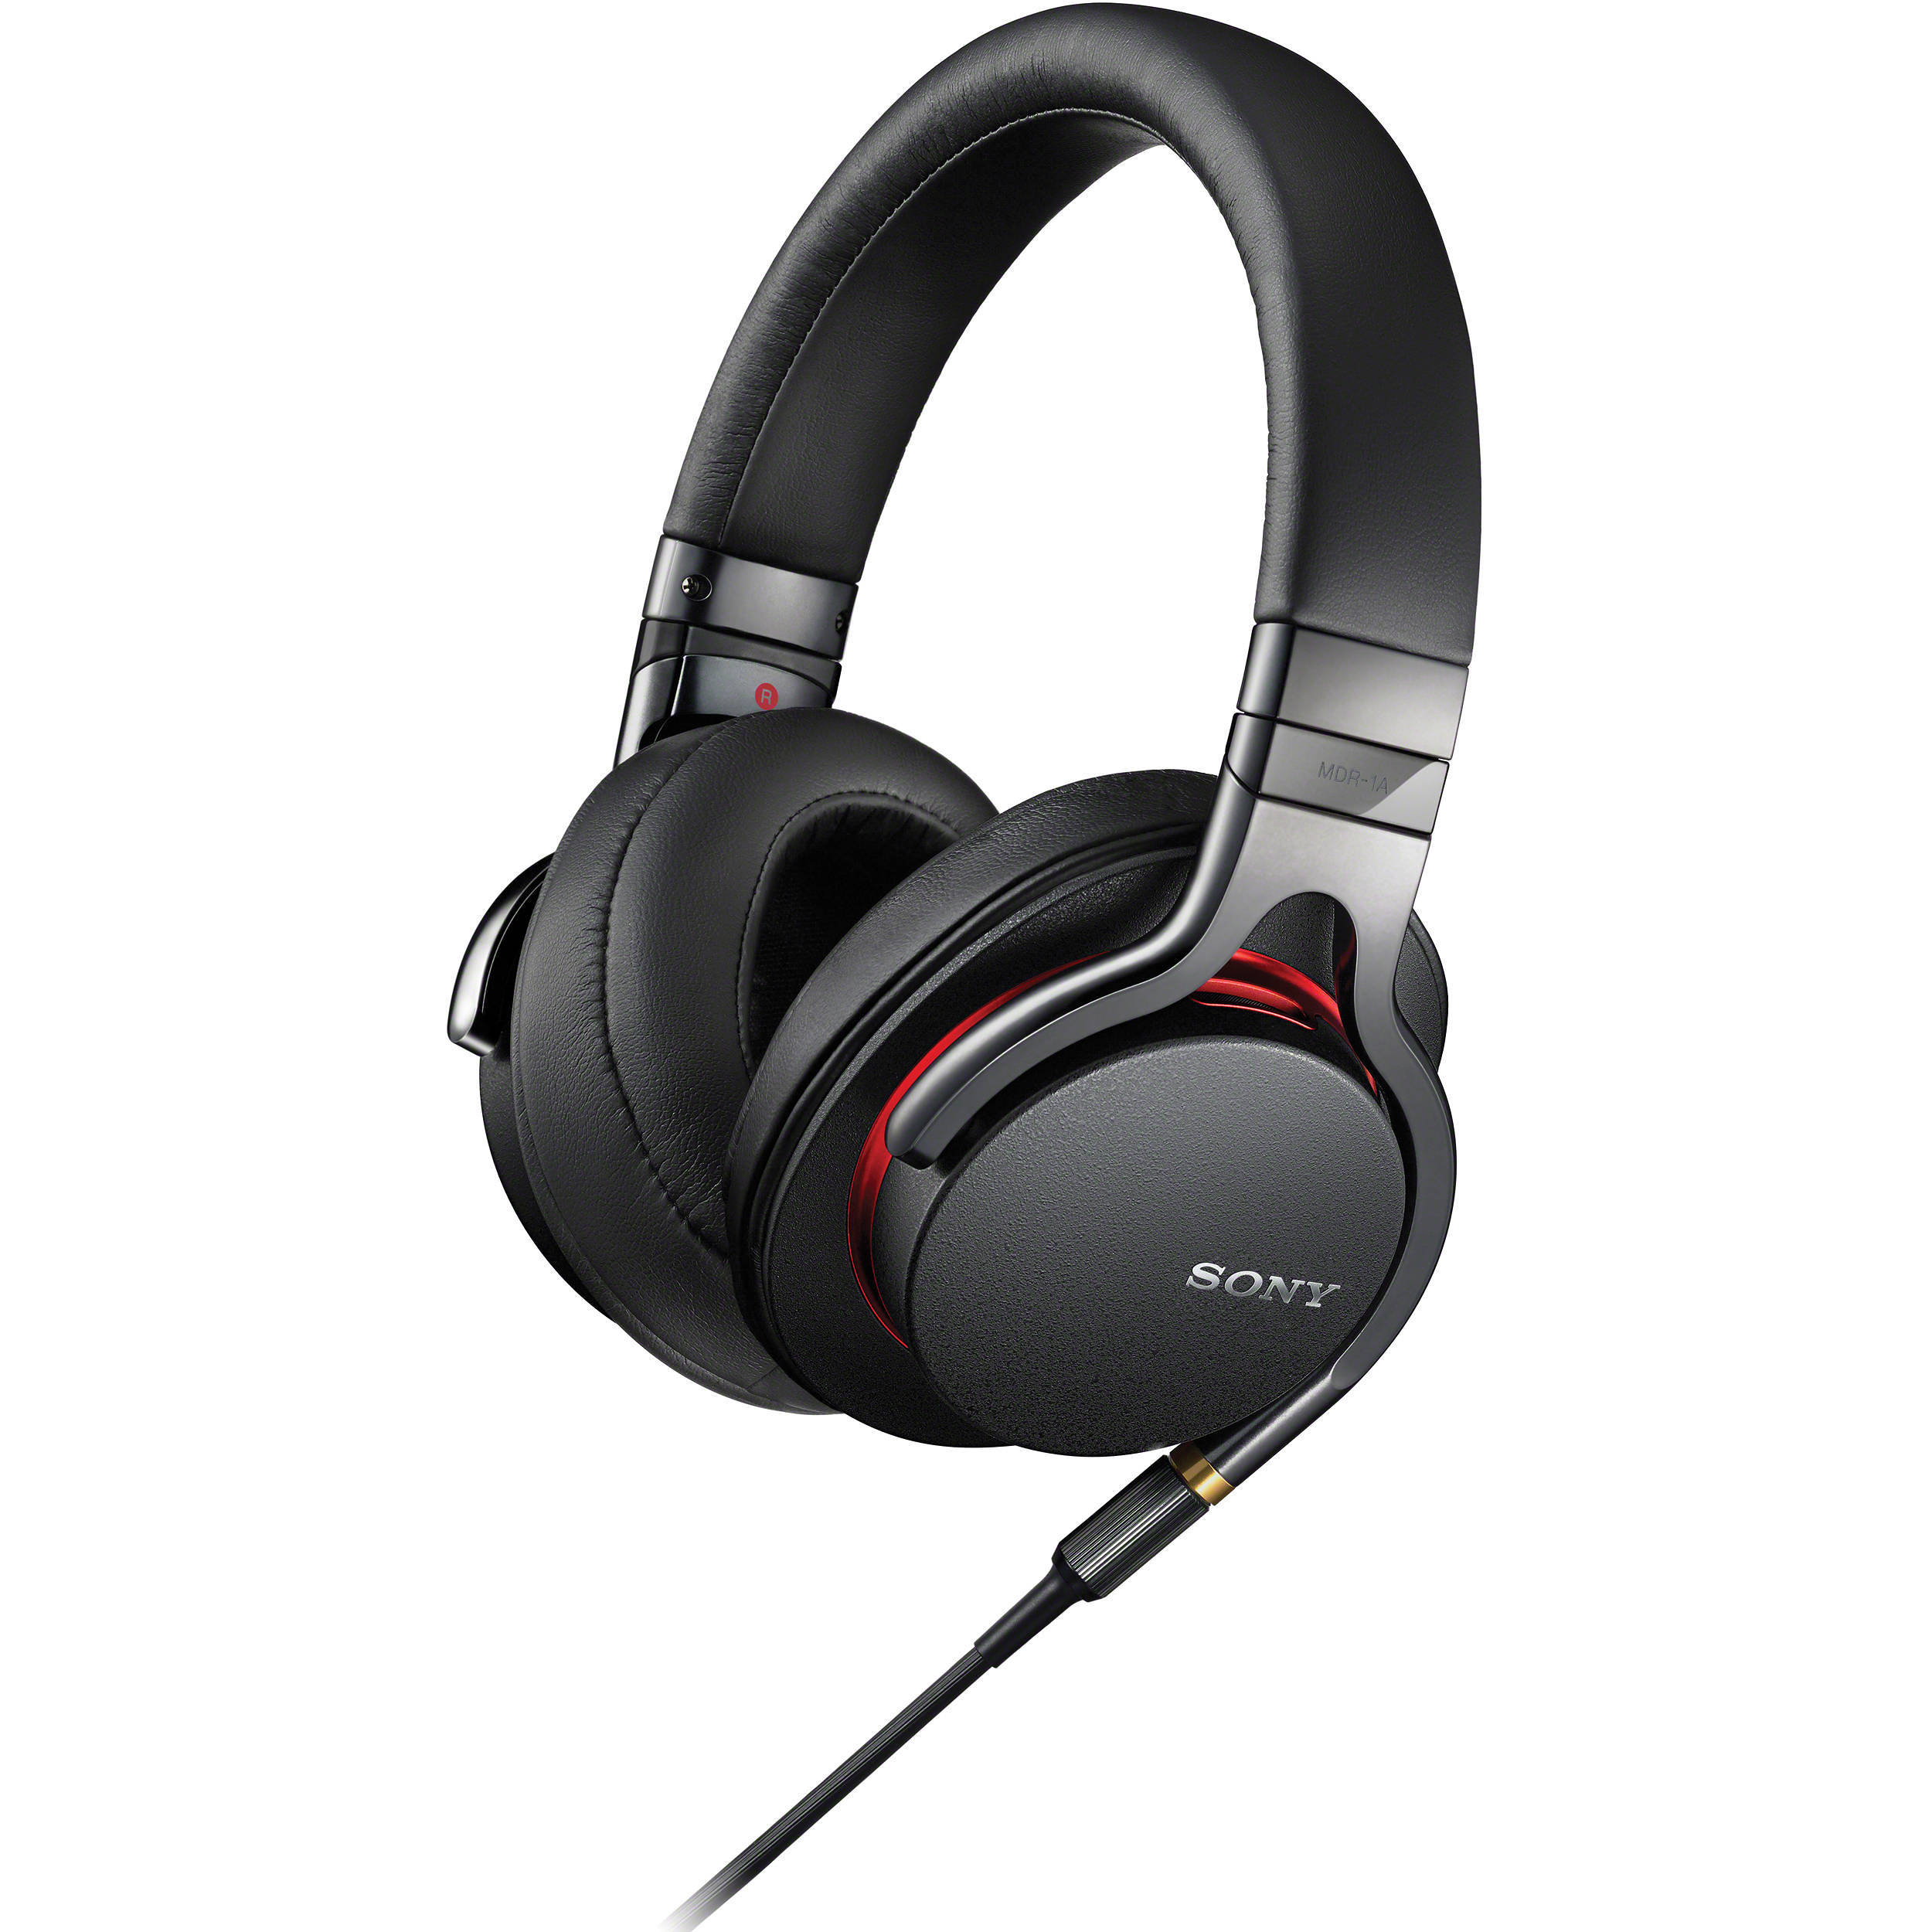 Sony Consumer Premium Hi-Res Stereo headphones